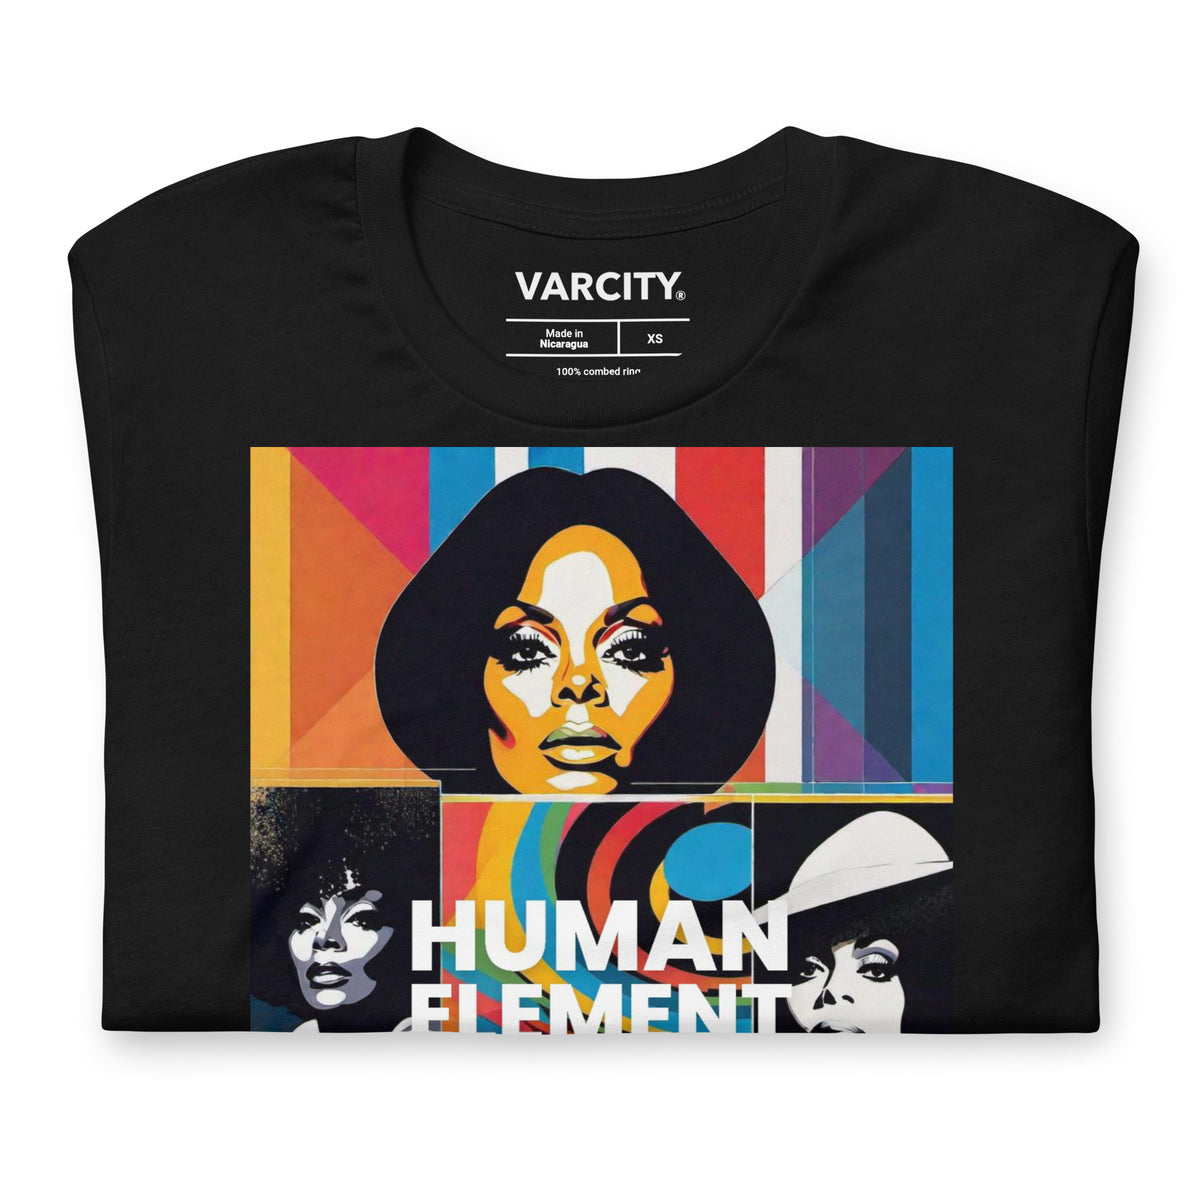 Human Element Diana Ross Homage Unisex T-Shirt